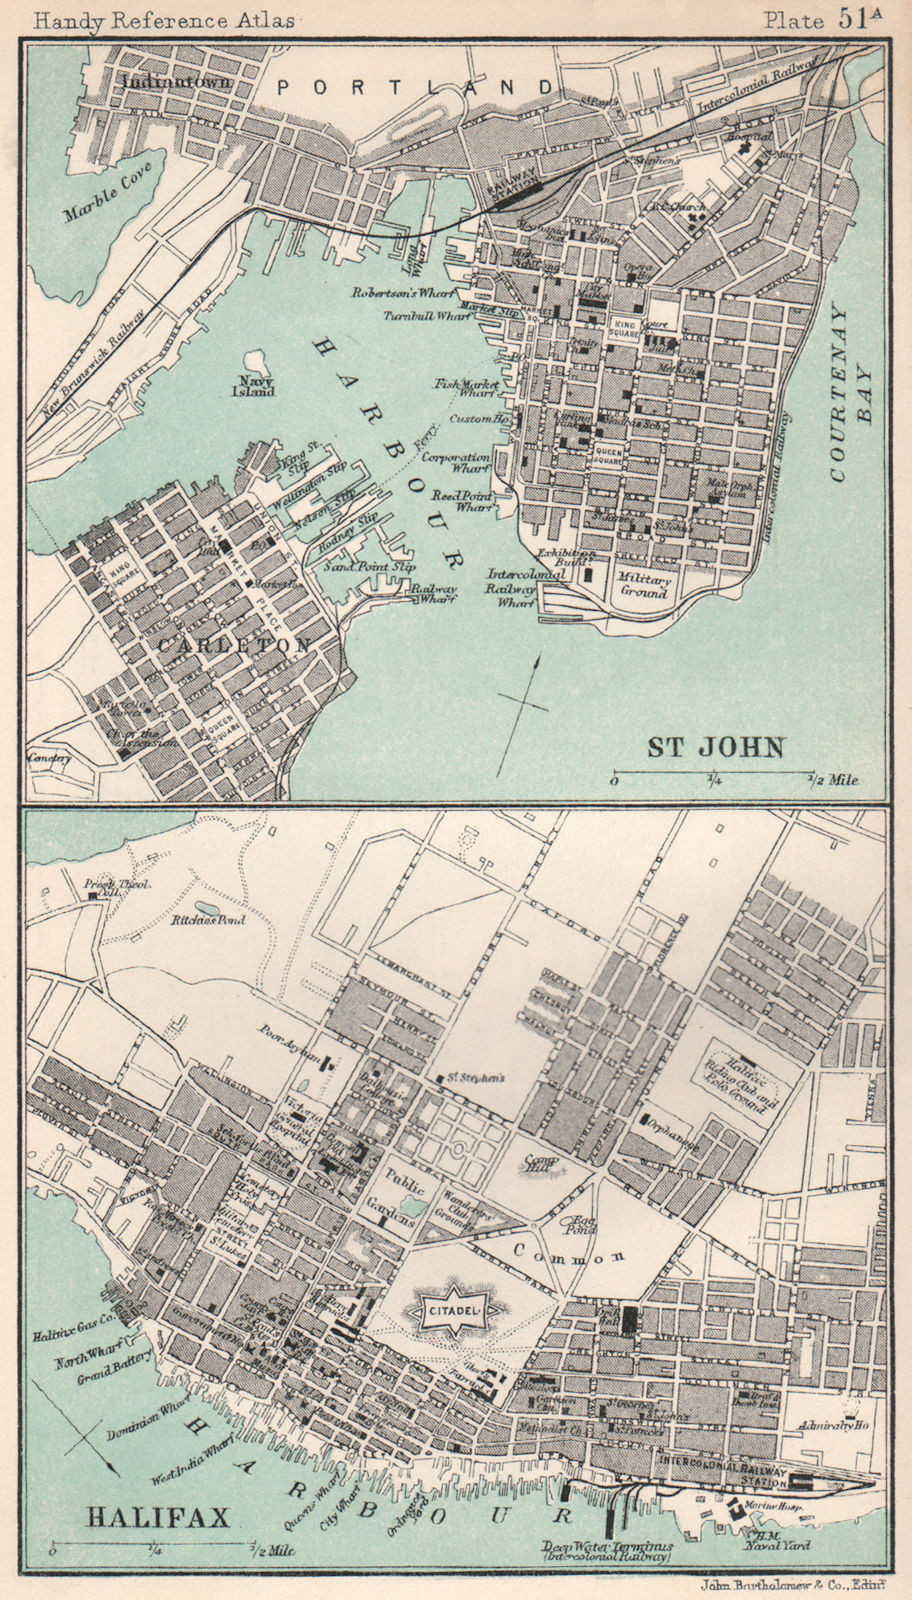 Associate Product Halifax & St. John town/city plans. Canada. BARTHOLOMEW 1904 old antique map